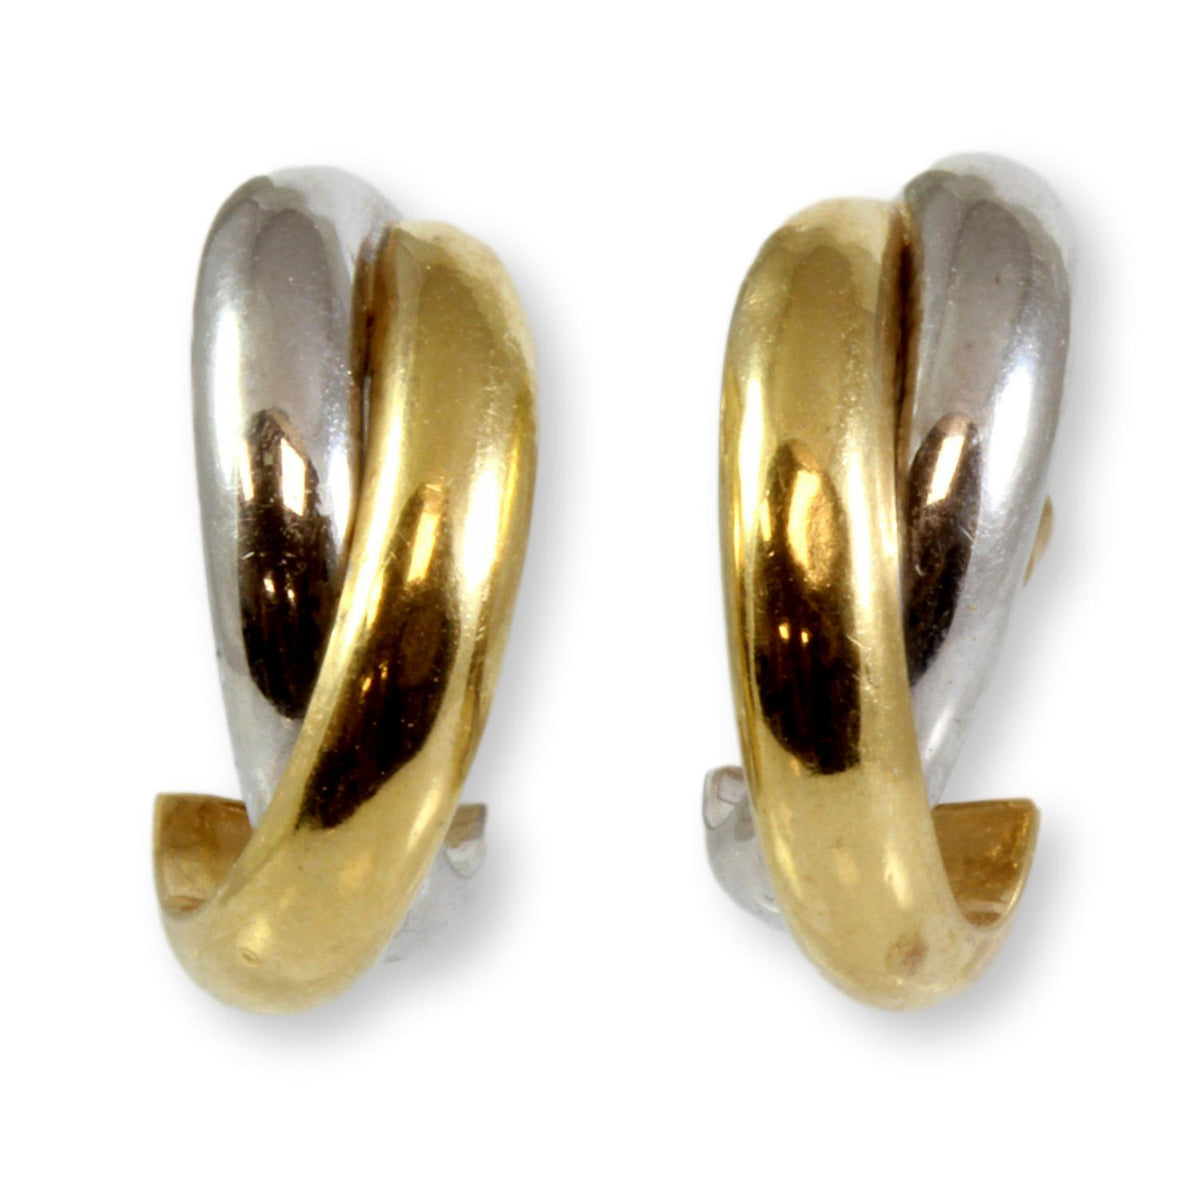 14K Yellow & White Gold Double Intertwined Hoop Earrings